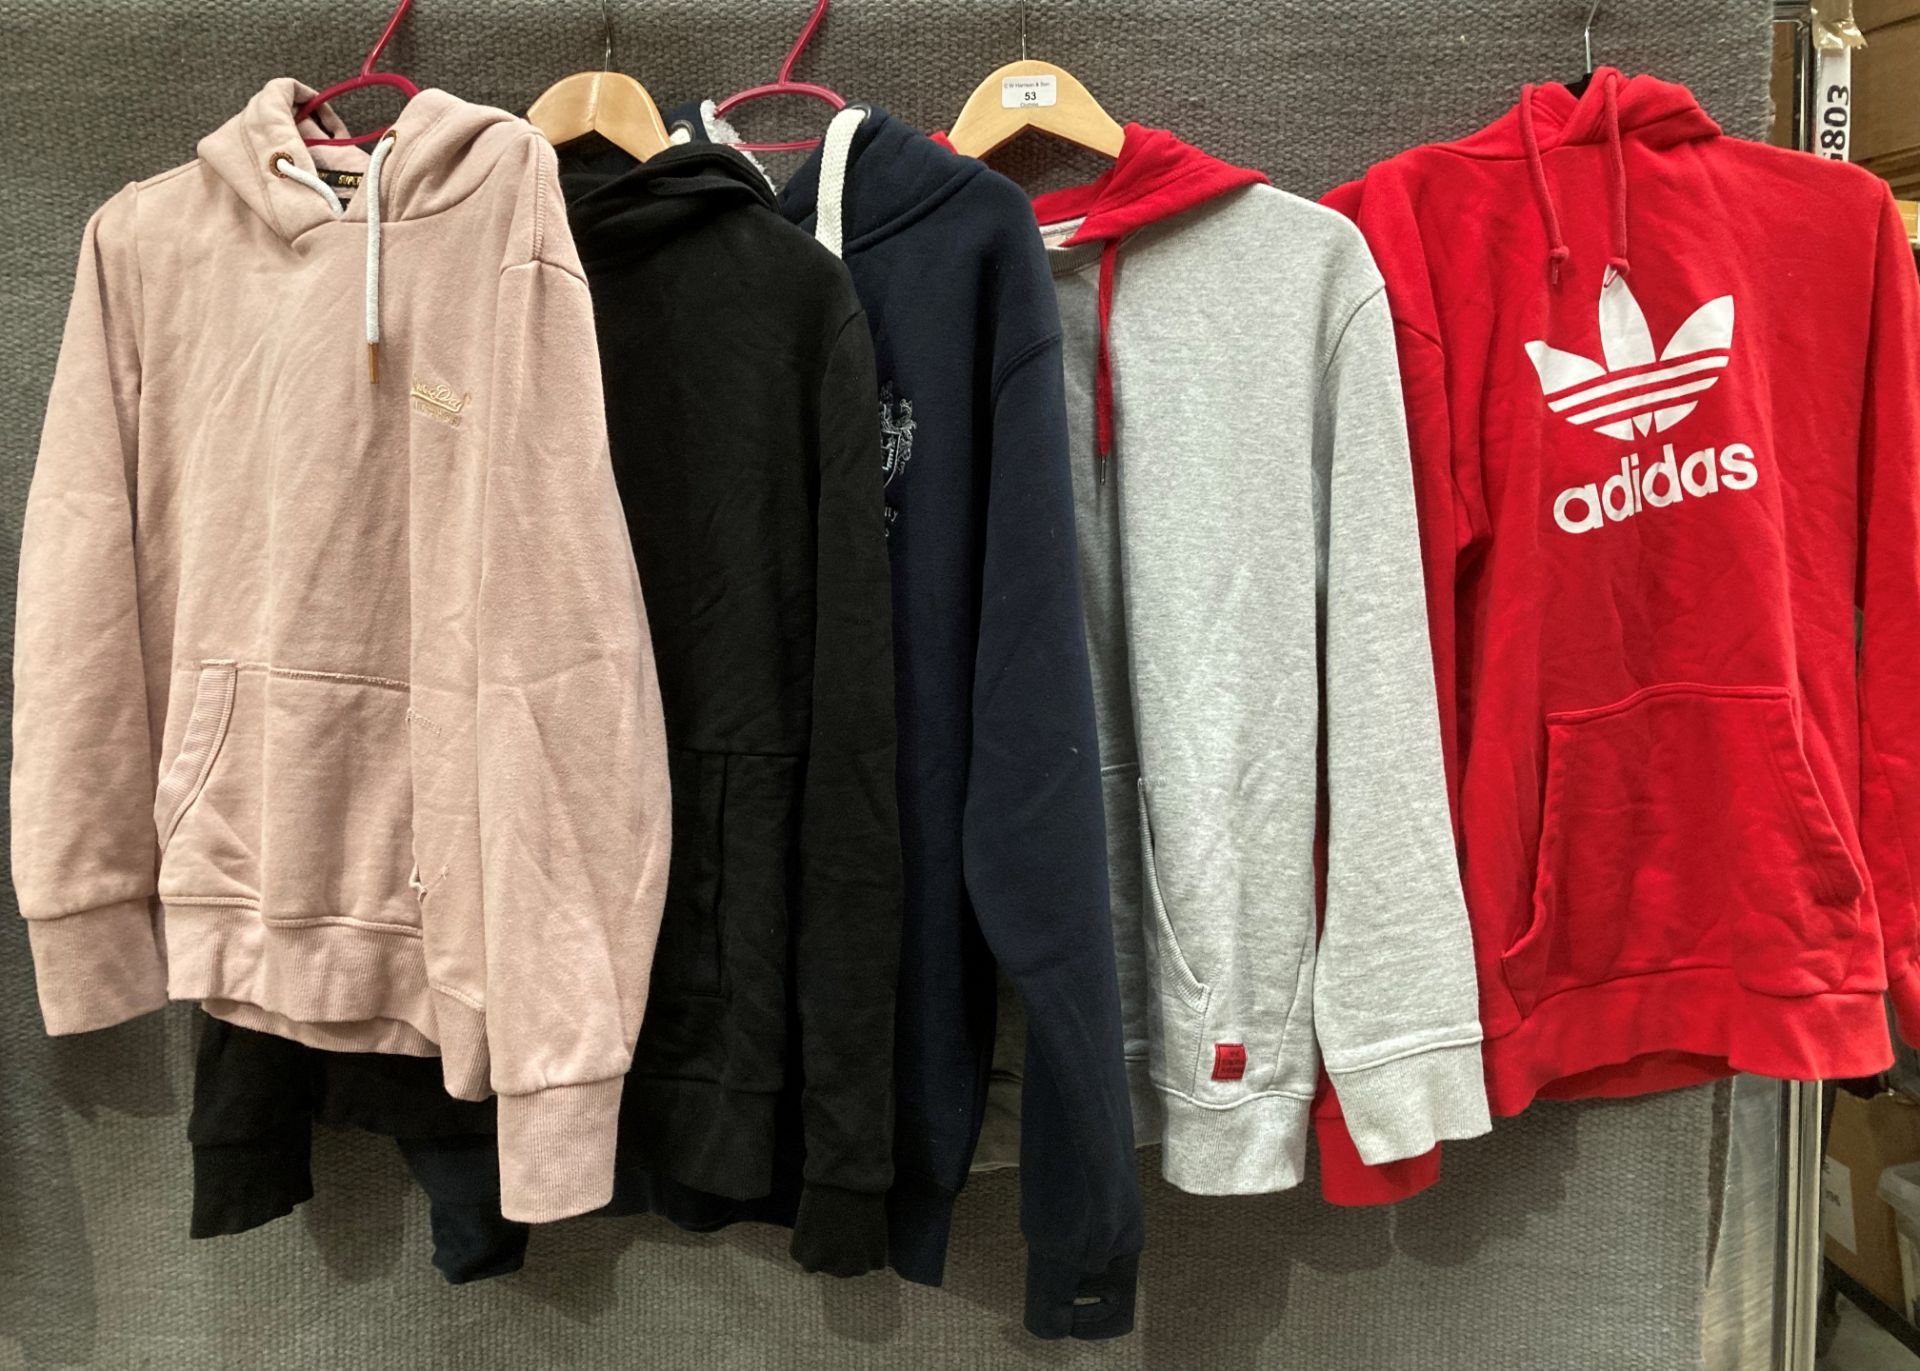 Five assorted hoodies branded Adidas, Superdry,